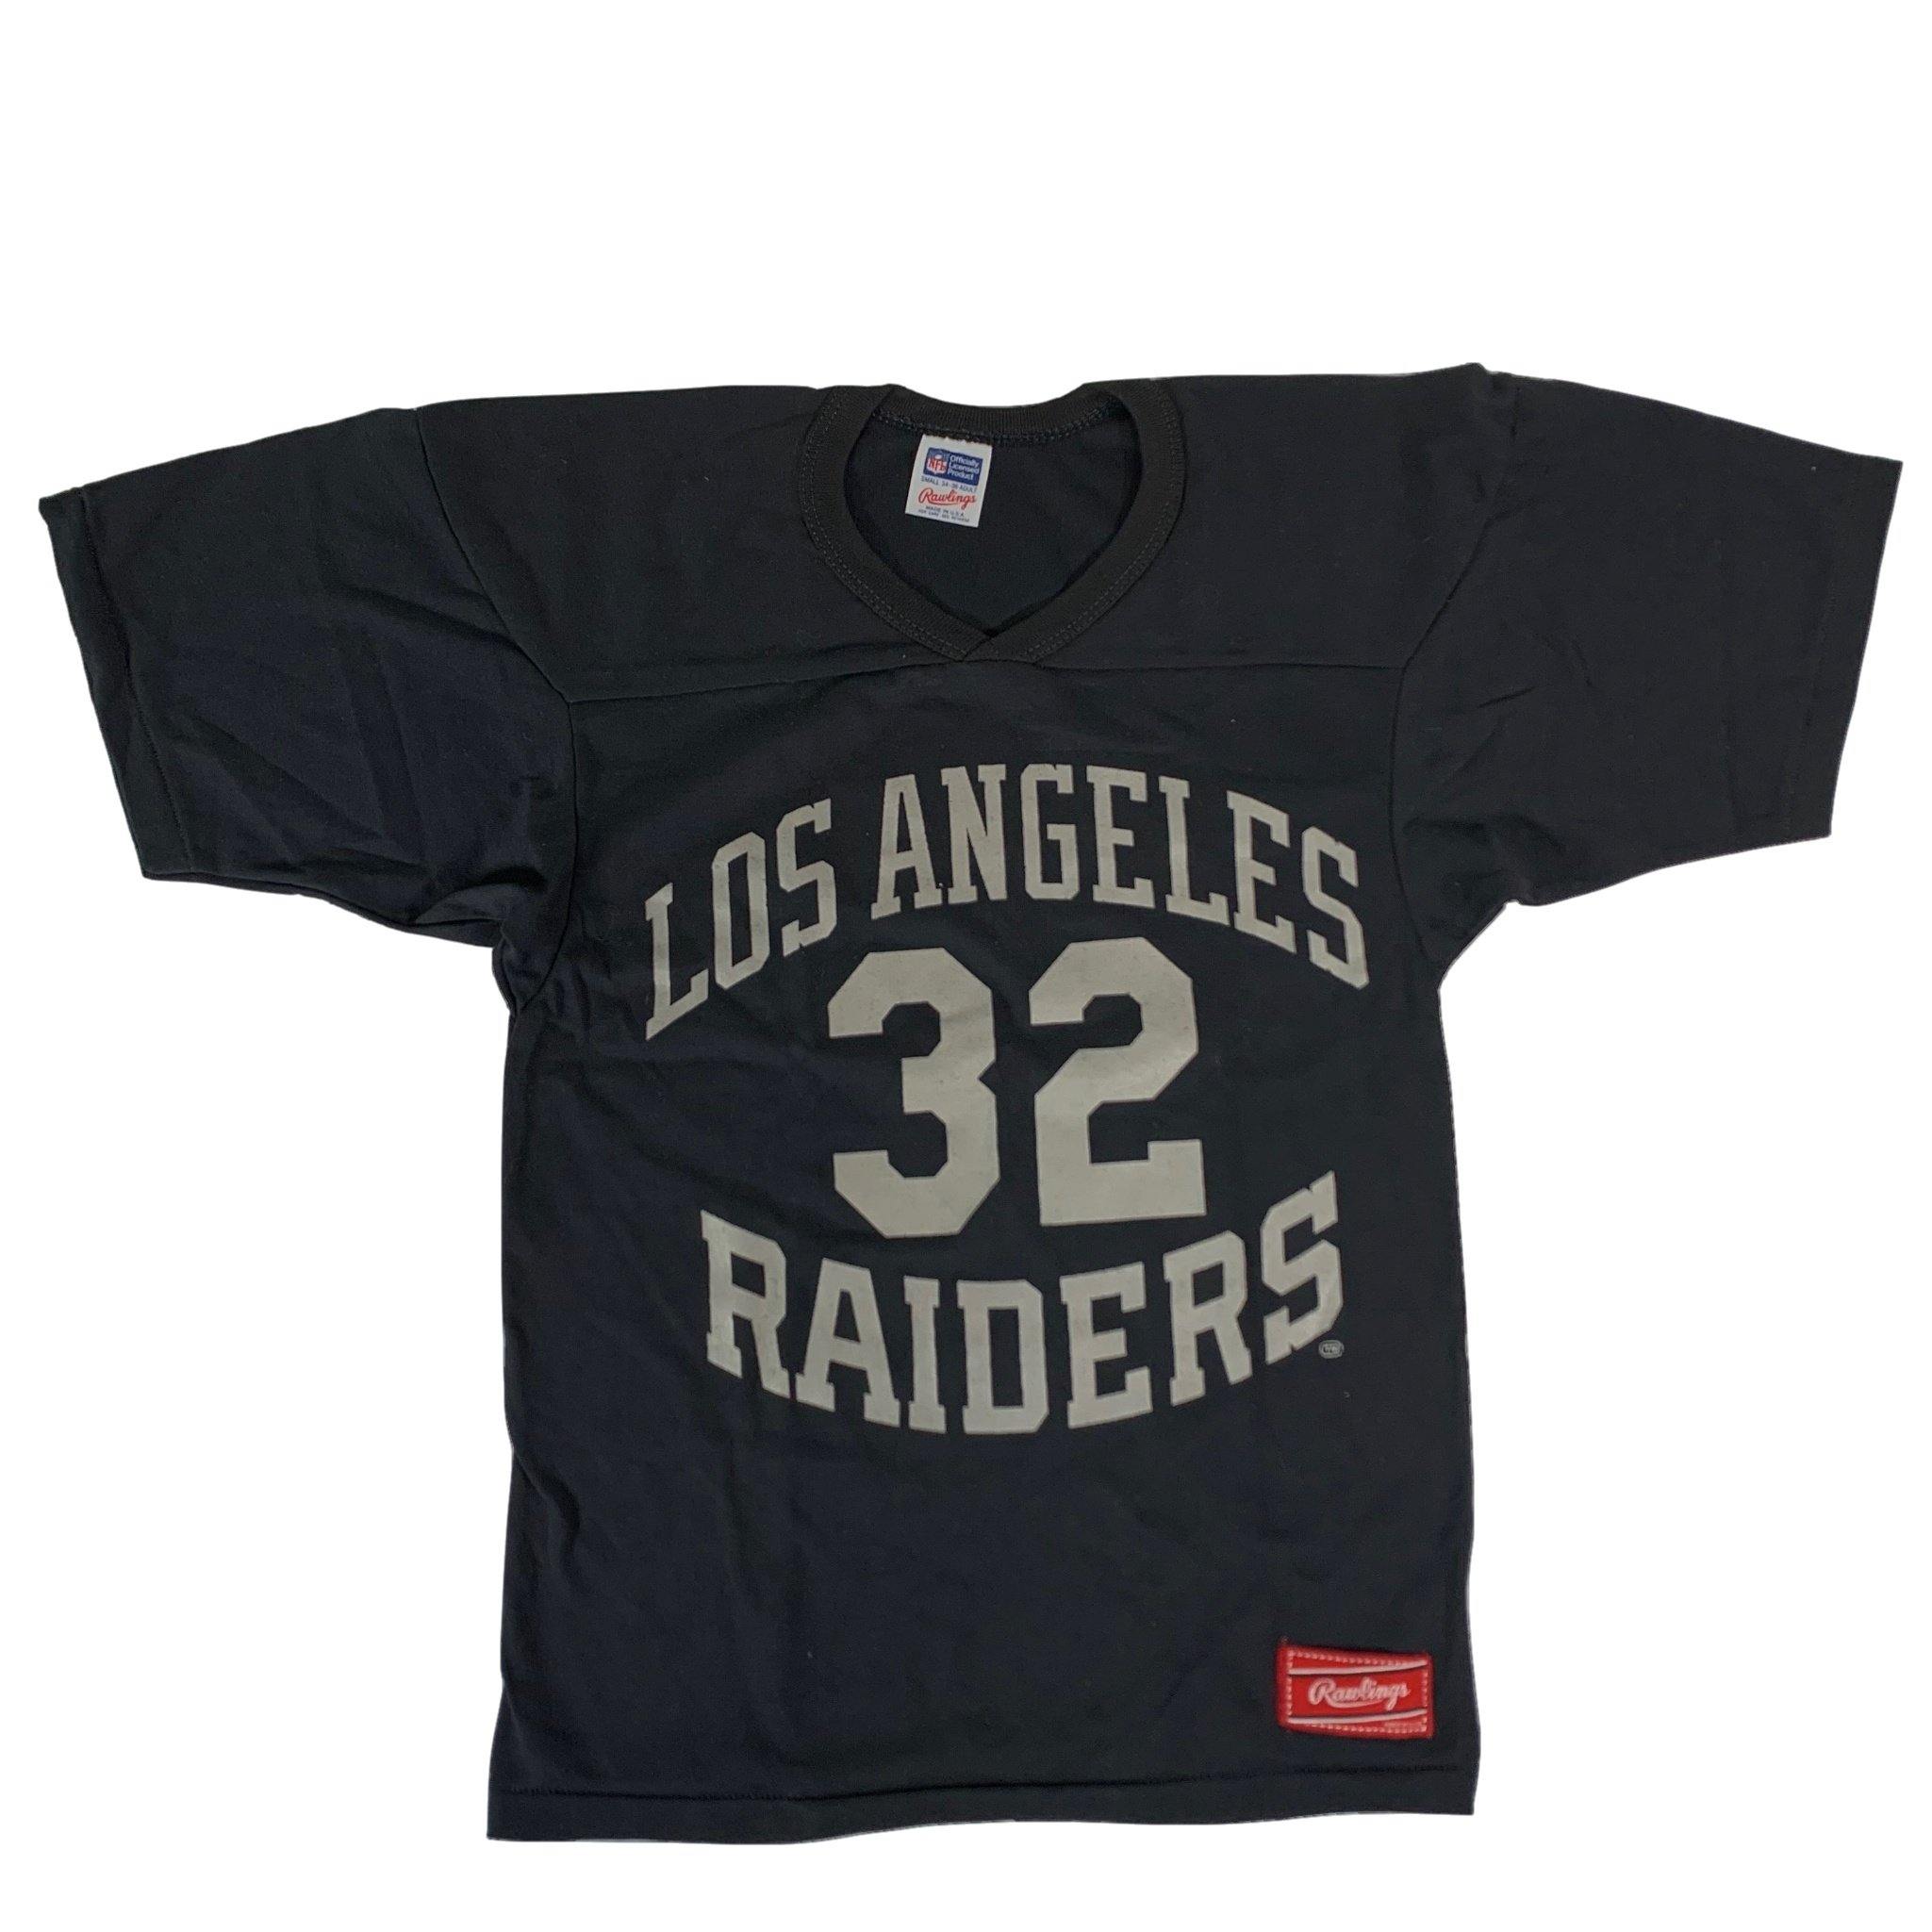 Vintage 1992 Los Angeles Raiders Youth Tee Shirt Black Size